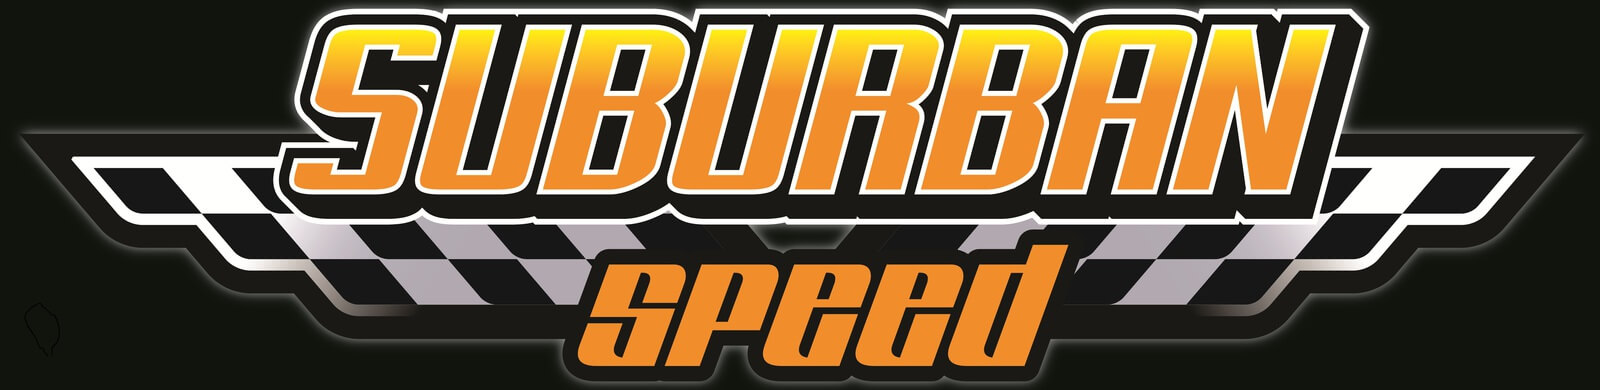 Suburban Motors Harley-Davidson Speed Performance Center